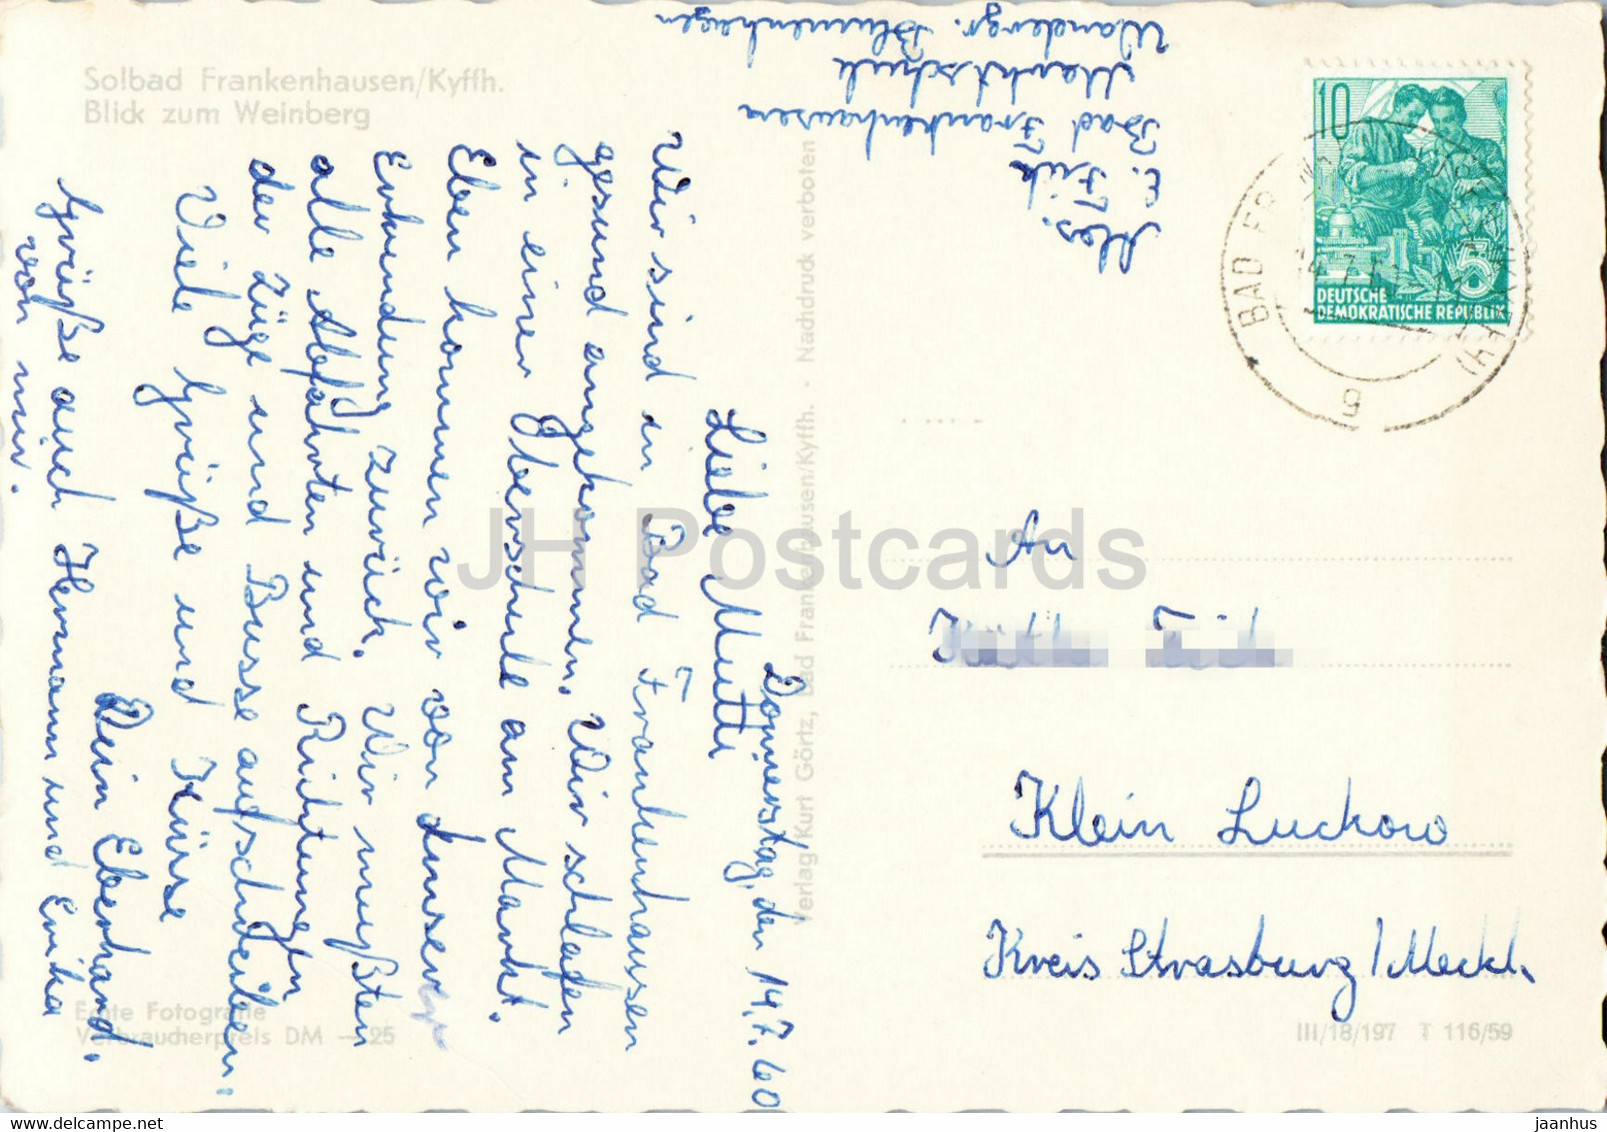 Solbad Frankenhausen - Blick Zum Weinberg - Old Postcard - 1961 - Germany DDR - Used - Bad Frankenhausen